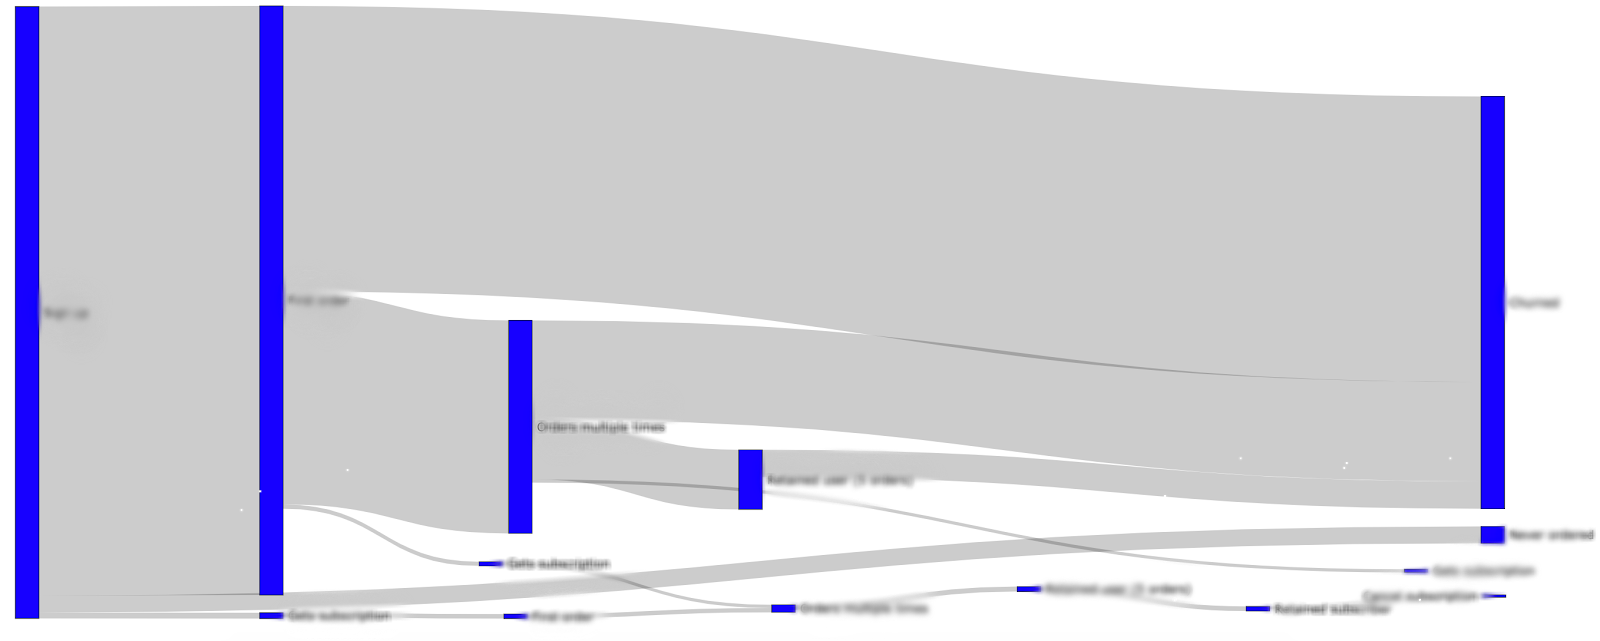 Sankey diagram to replicate designed customer journey with data